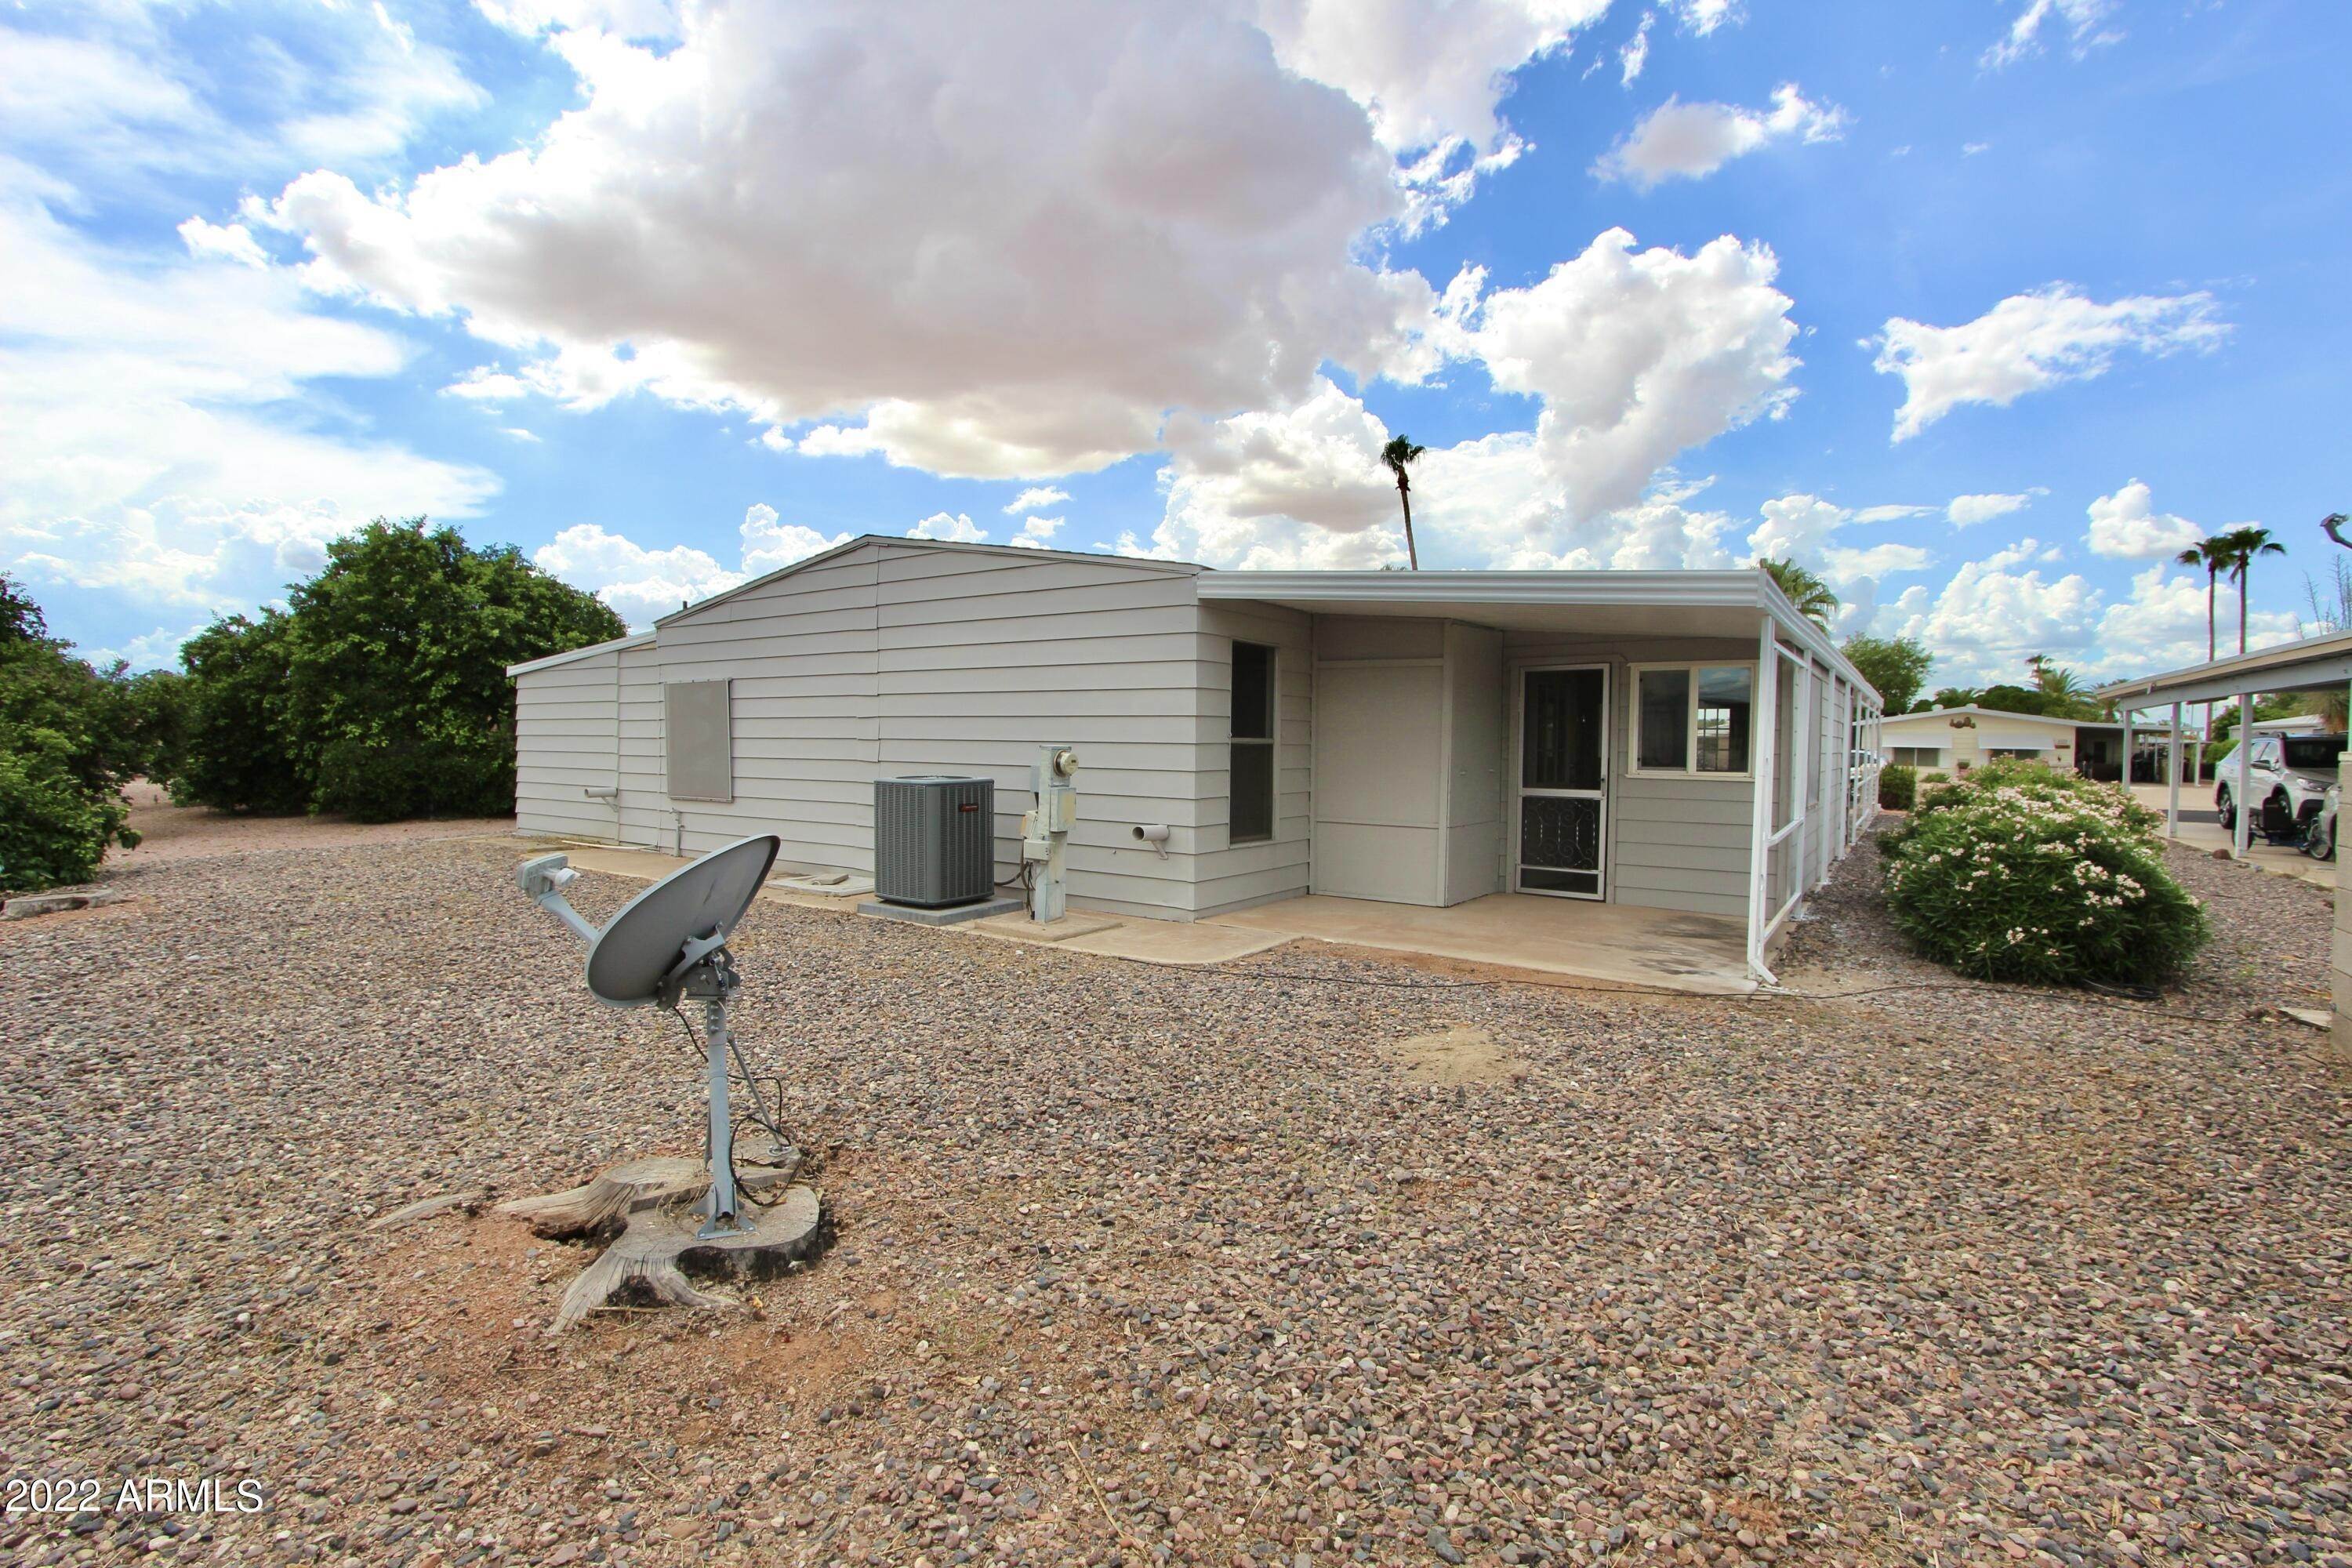 25. Mobile Home at Sun Lakes, AZ 85248